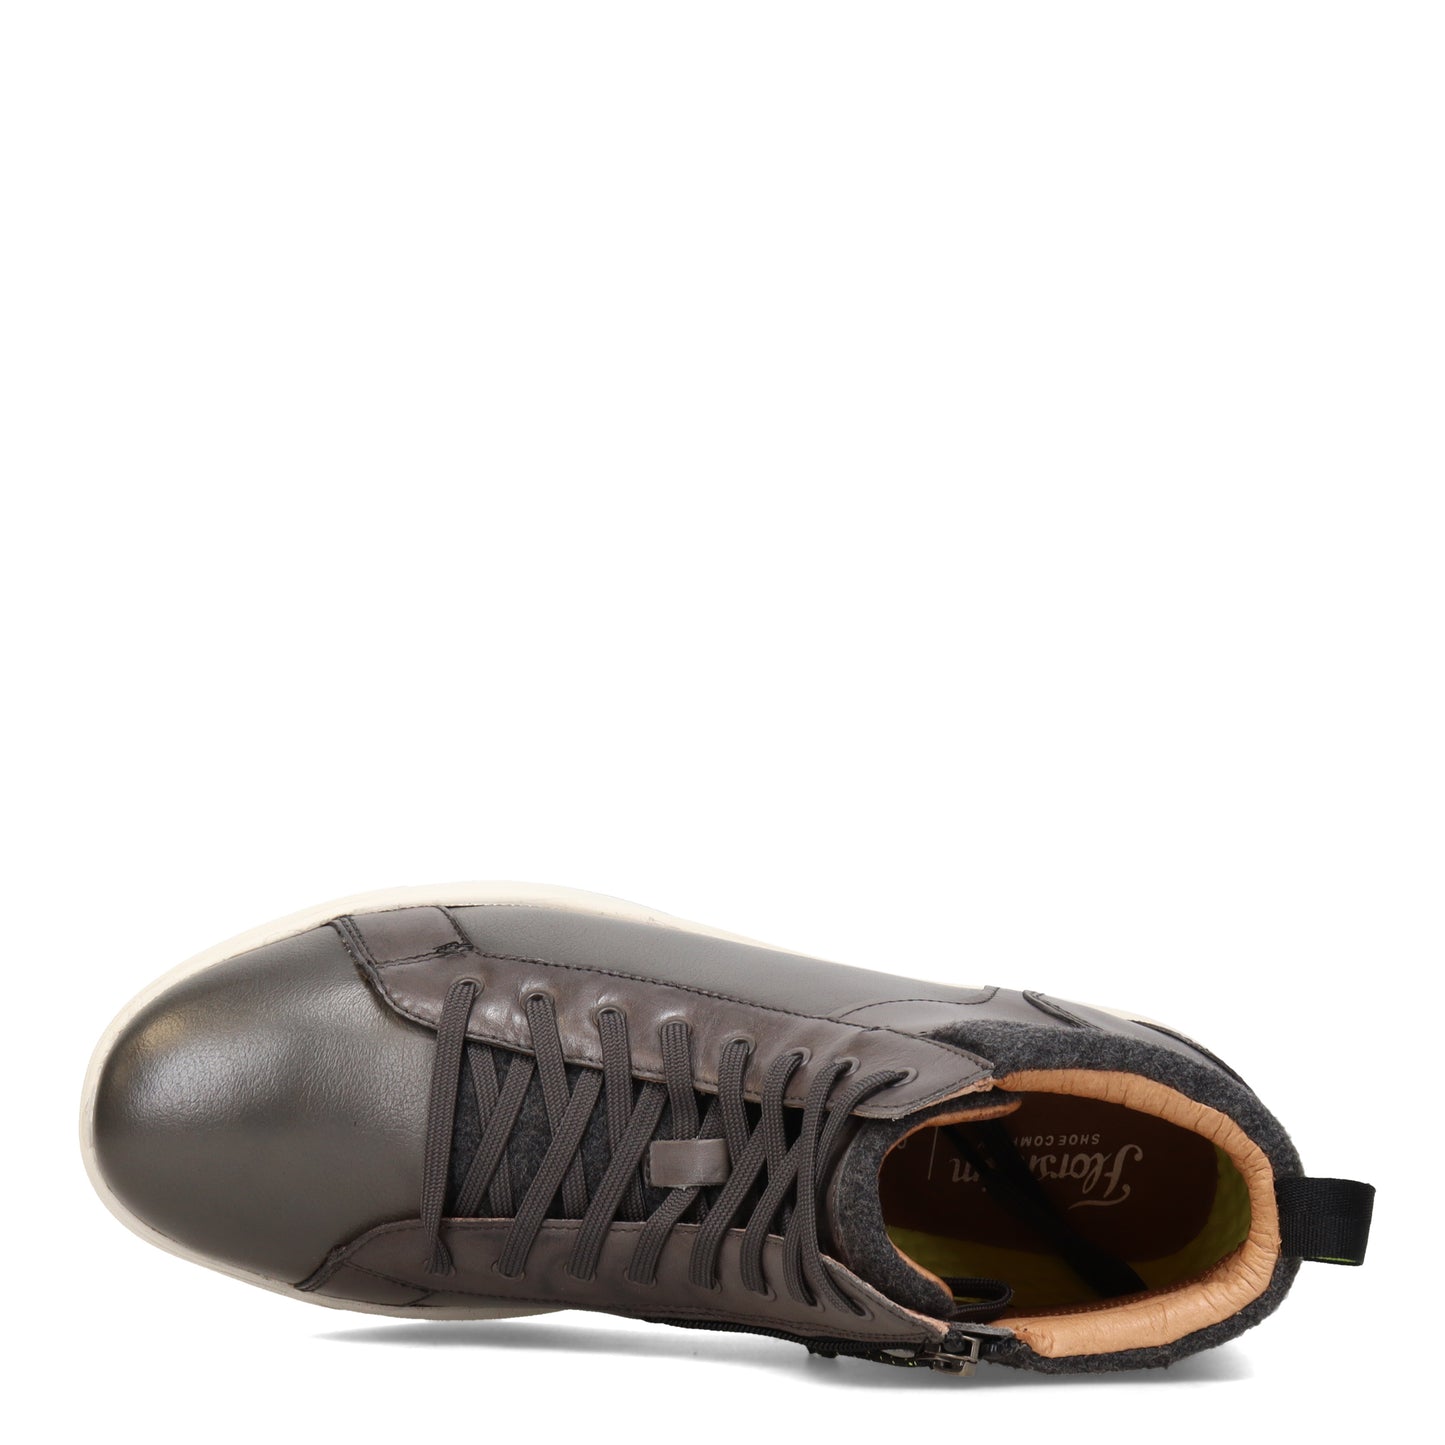 Peltz Shoes  Men's Florsheim Crossover Boot Grey 14337-020